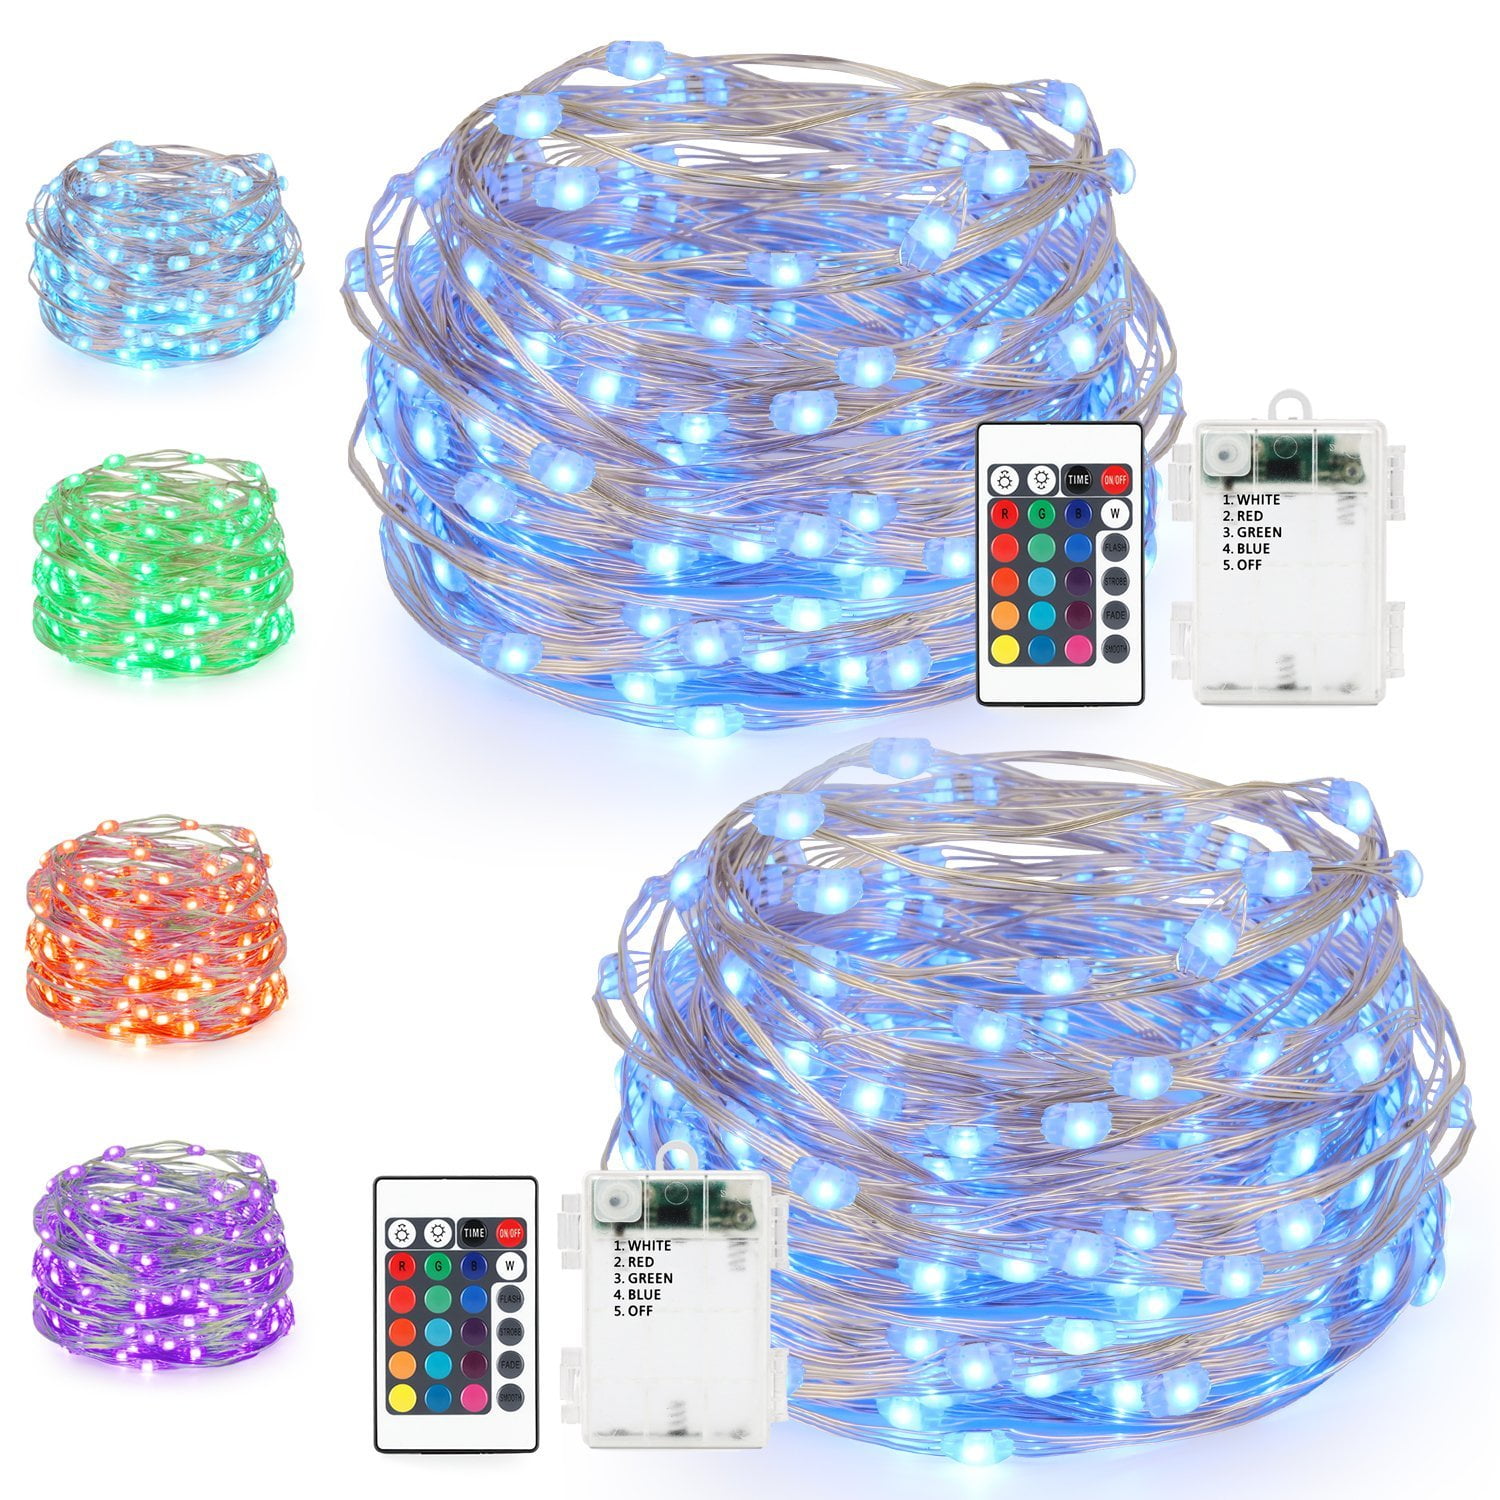 Led String Lights Kohree Battery, 24ct Color Changing Led Shatterproof Outdoor String Lights With Remote Threshold